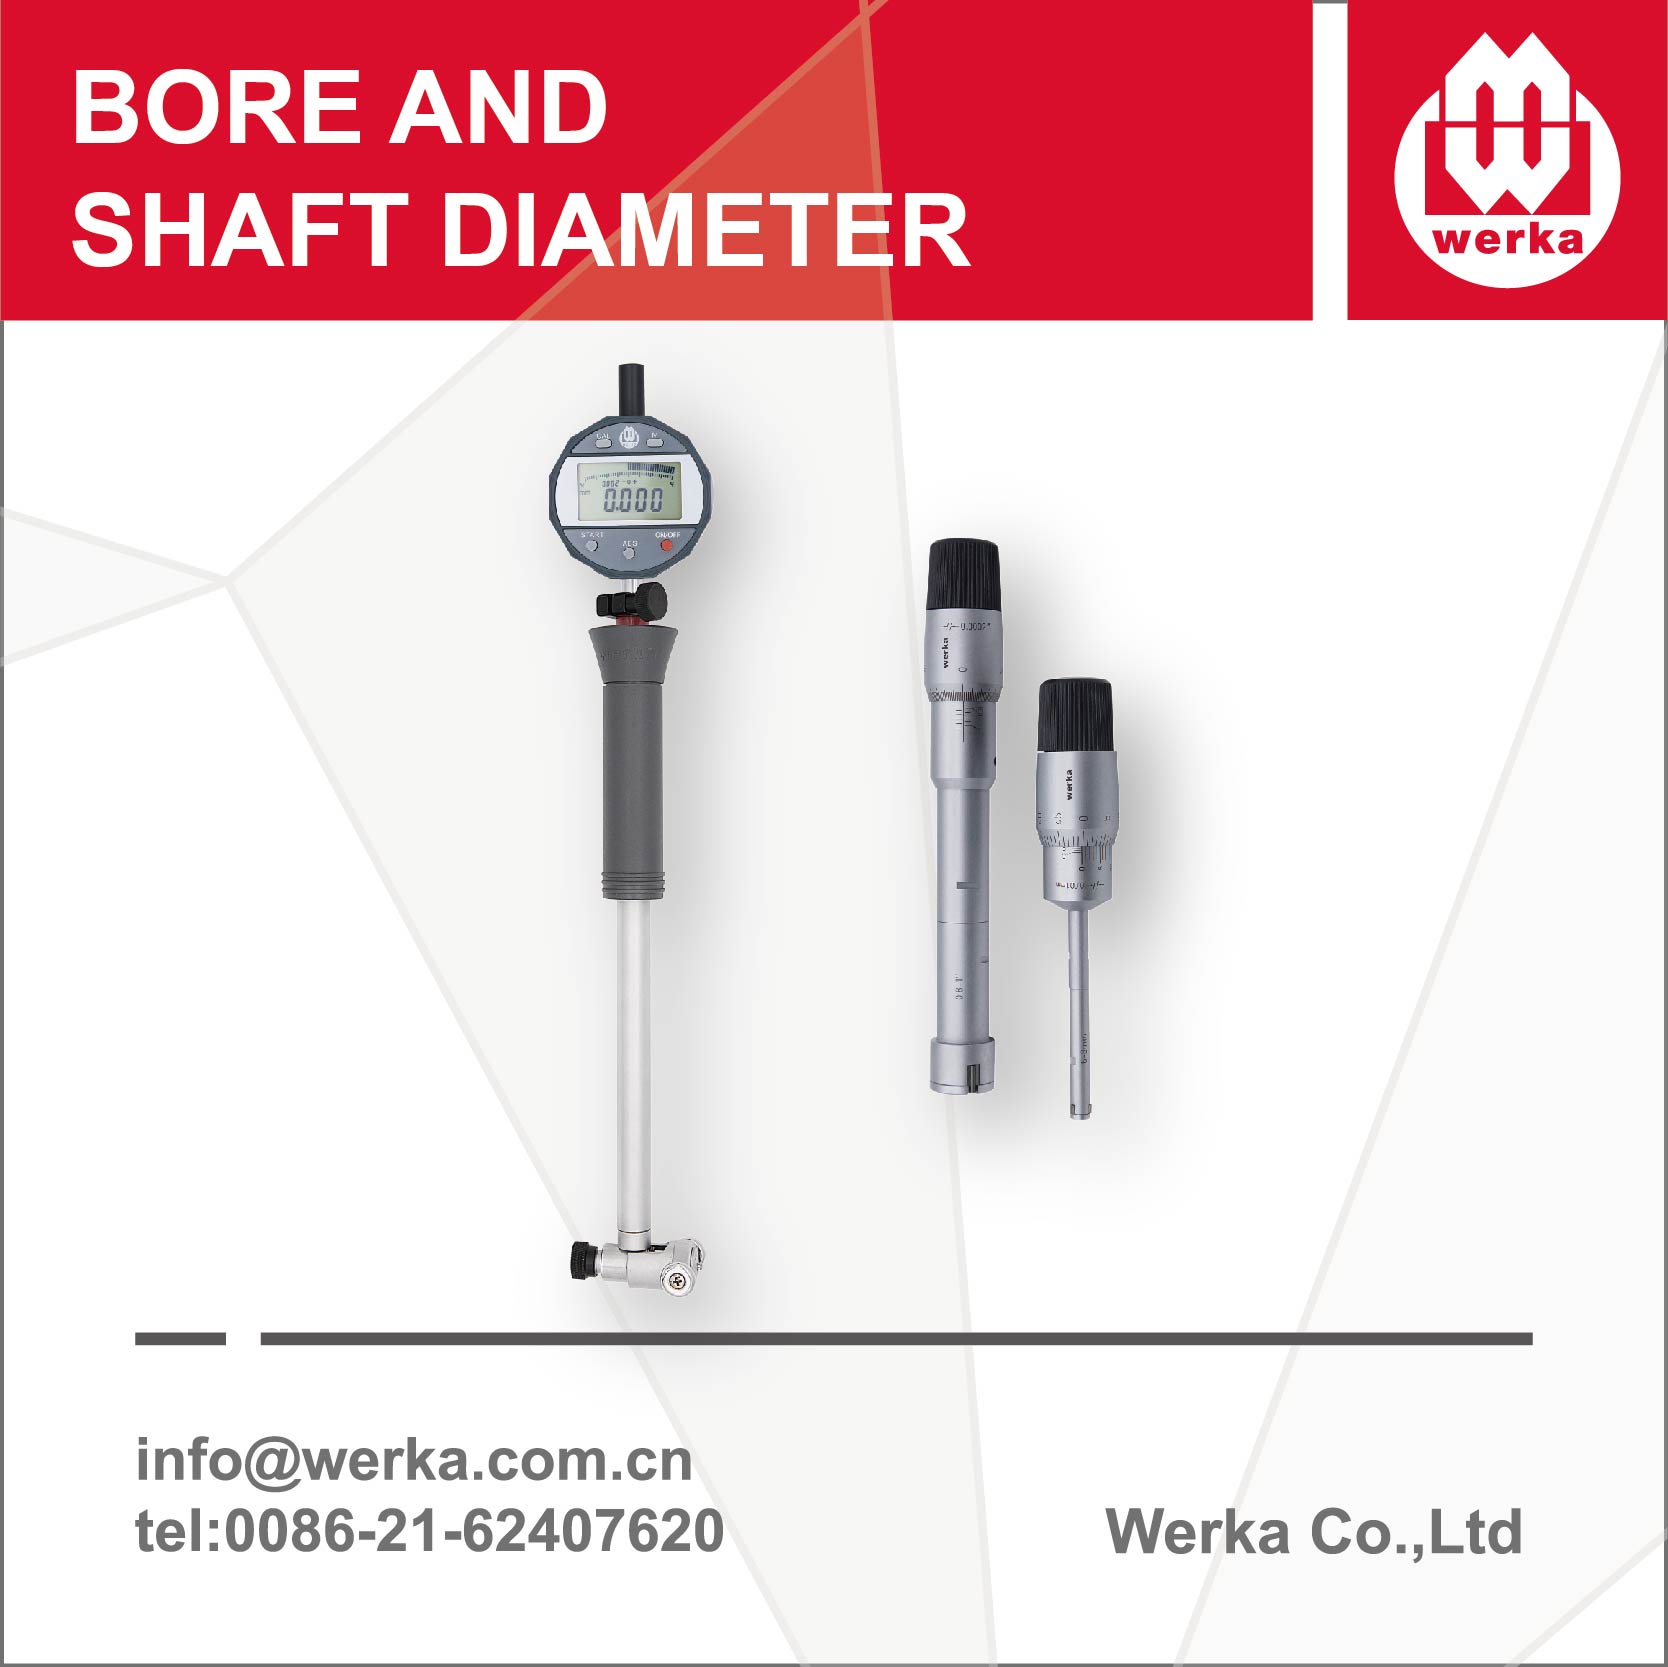 Bore and shaft diameter